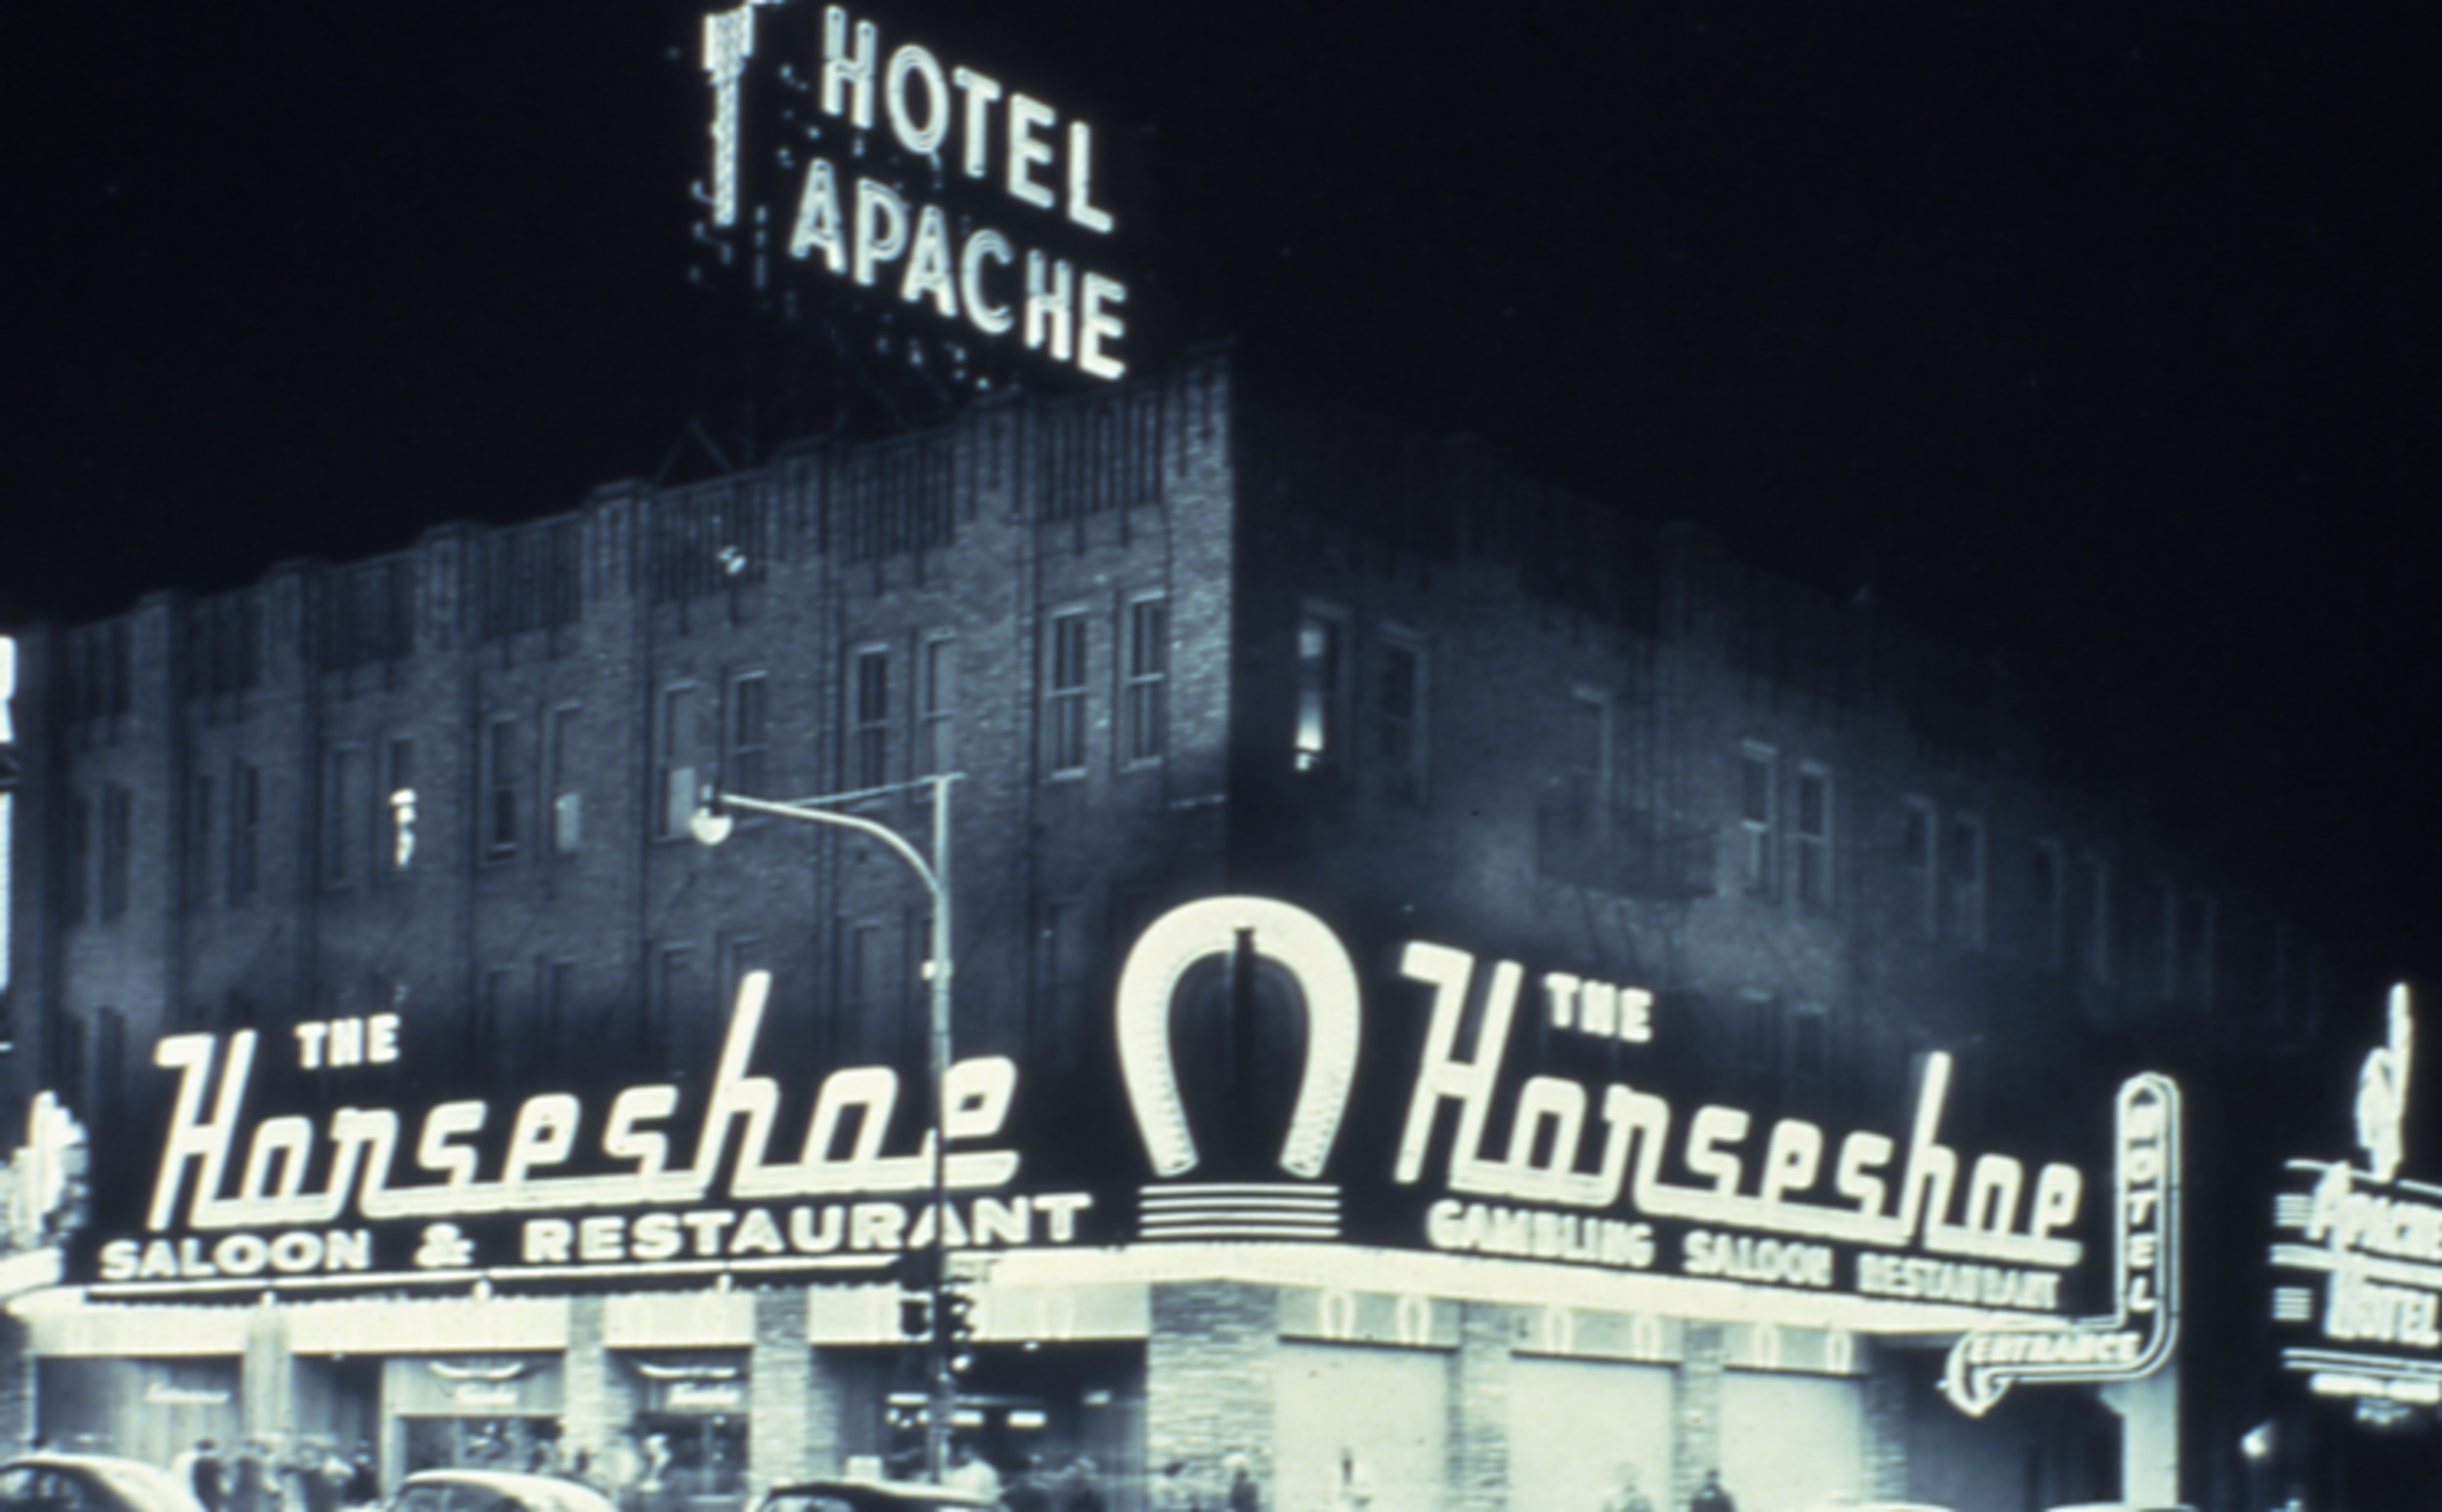 Slide of the Horseshoe Club's neon signs, Las Vegas, circa 1950s